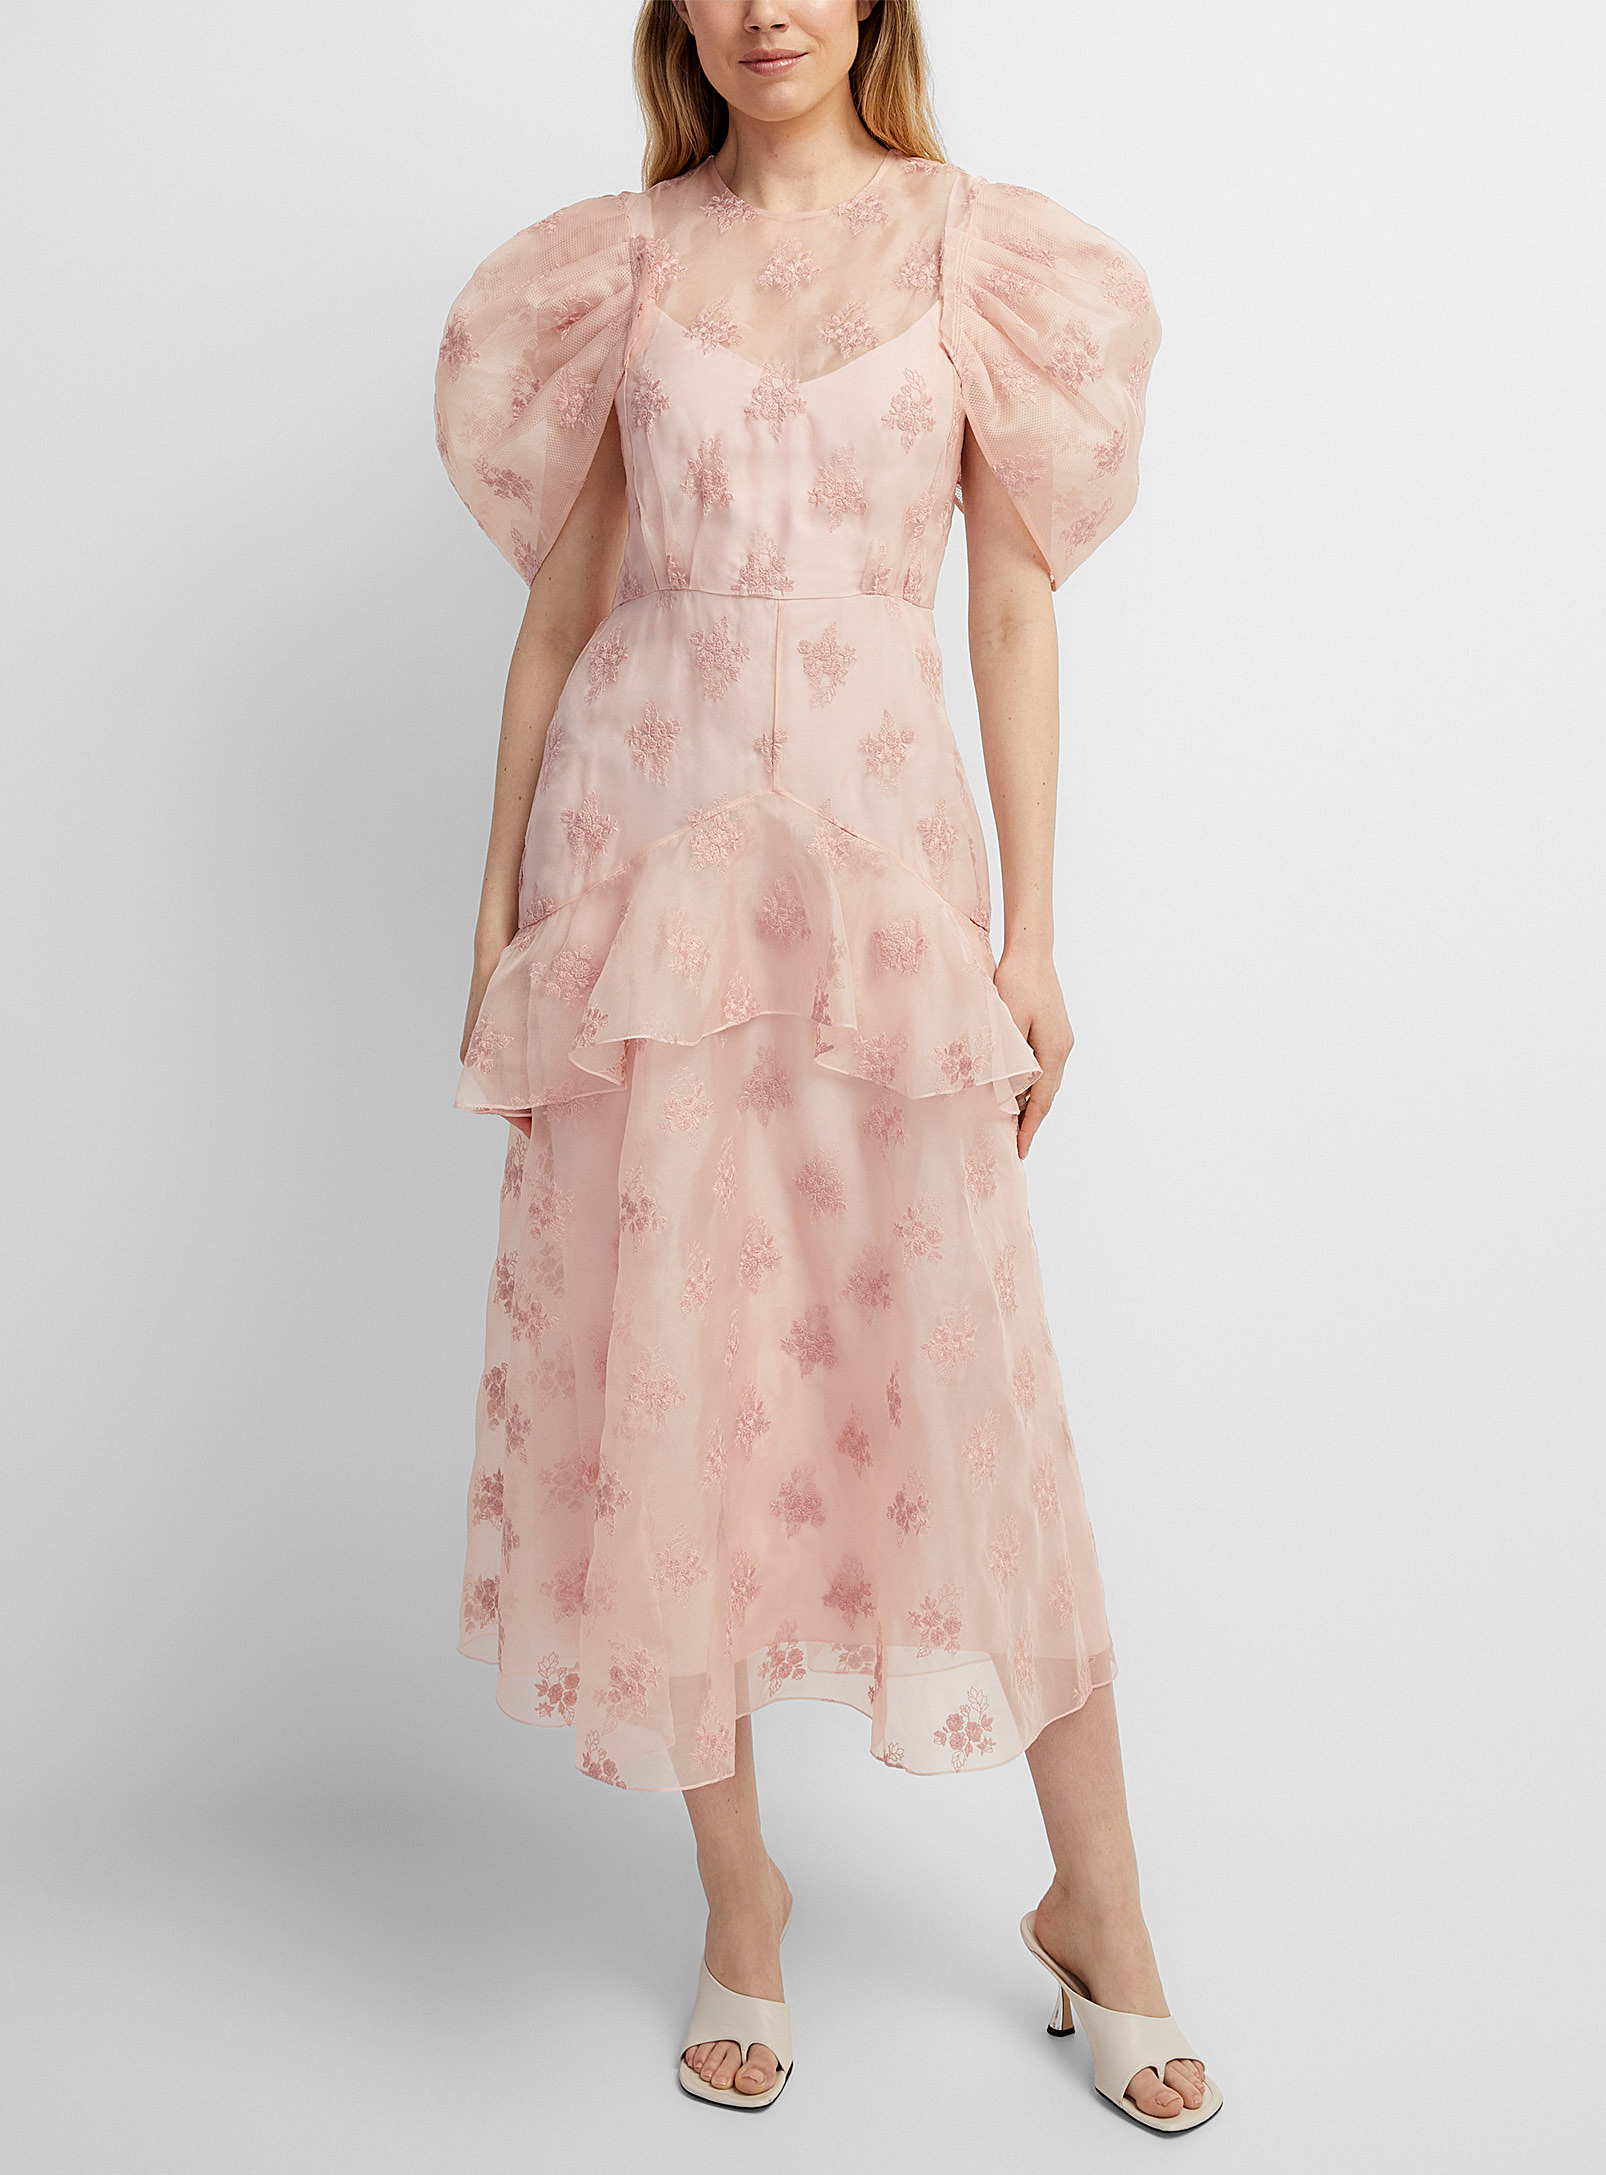 Erdem - Women's Embroidered organza pink dress